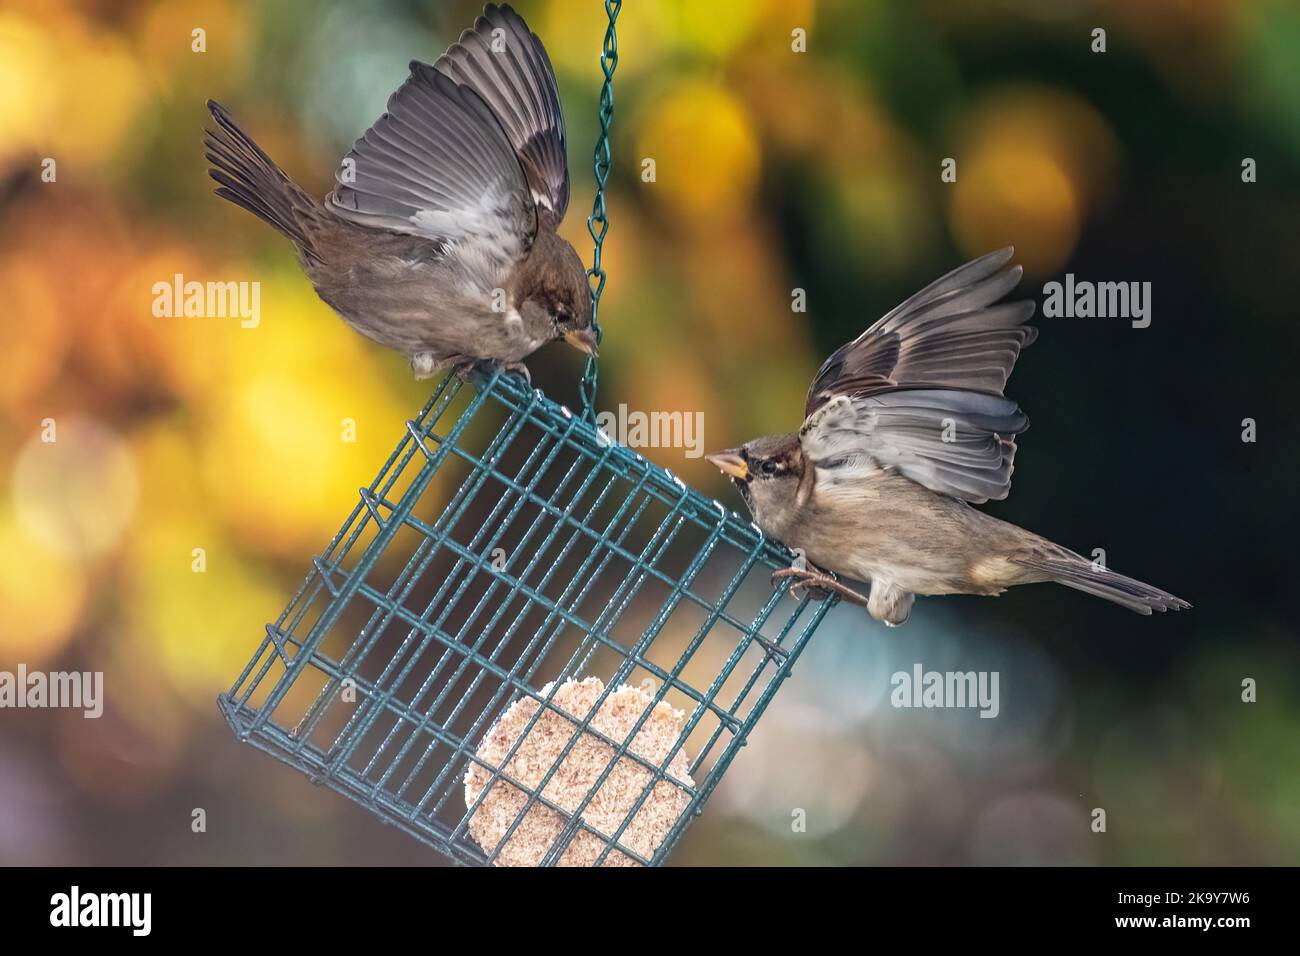 House sparrows at suet feeder Stock Photo